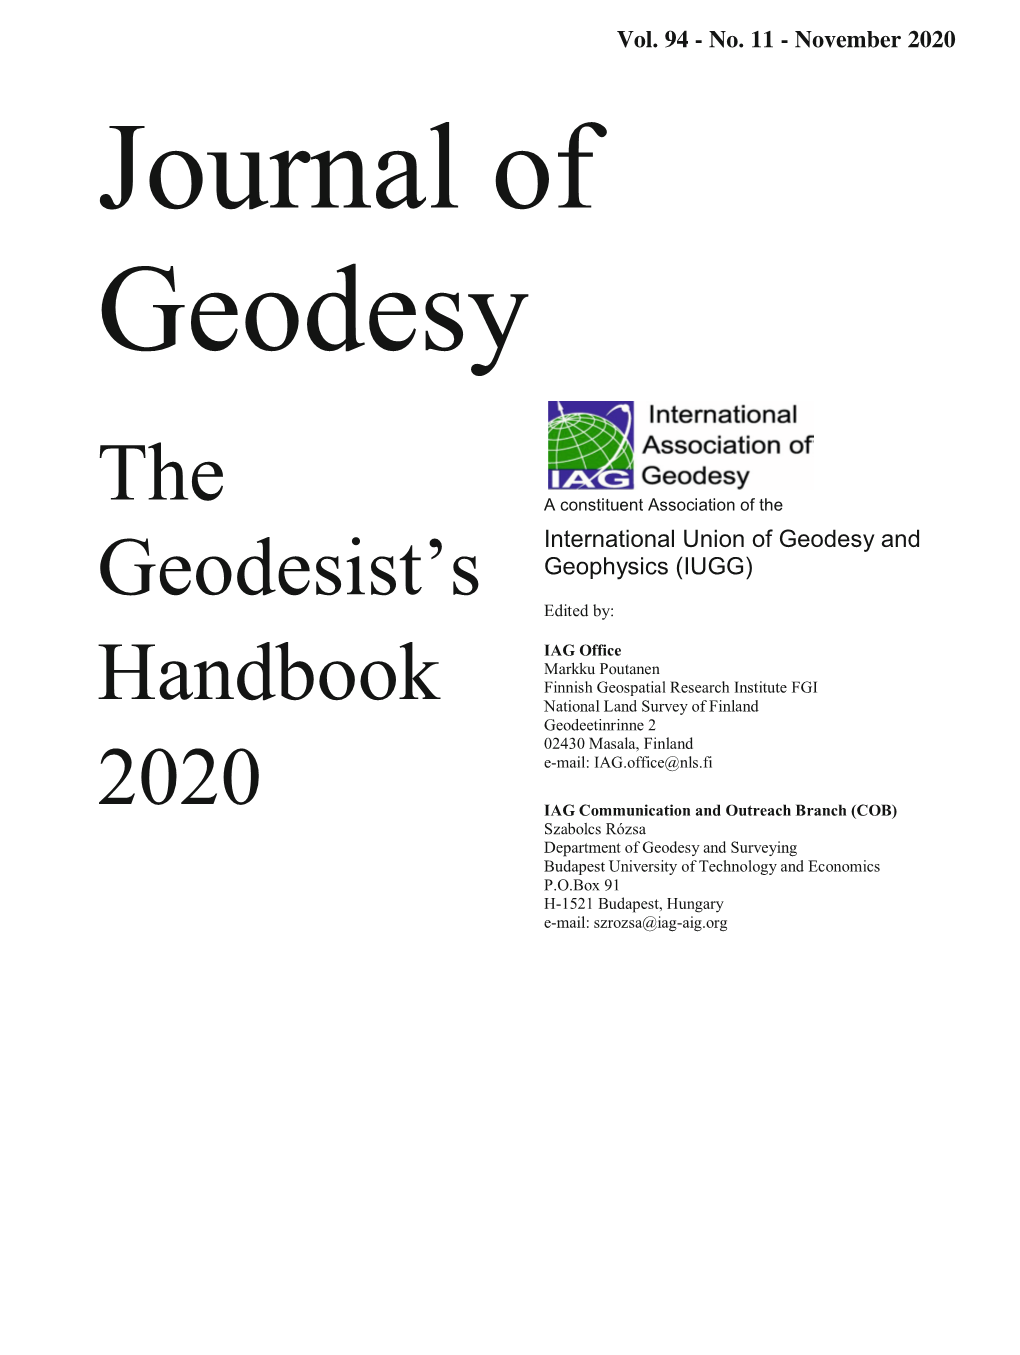 The Geodesist's Handbook 2020